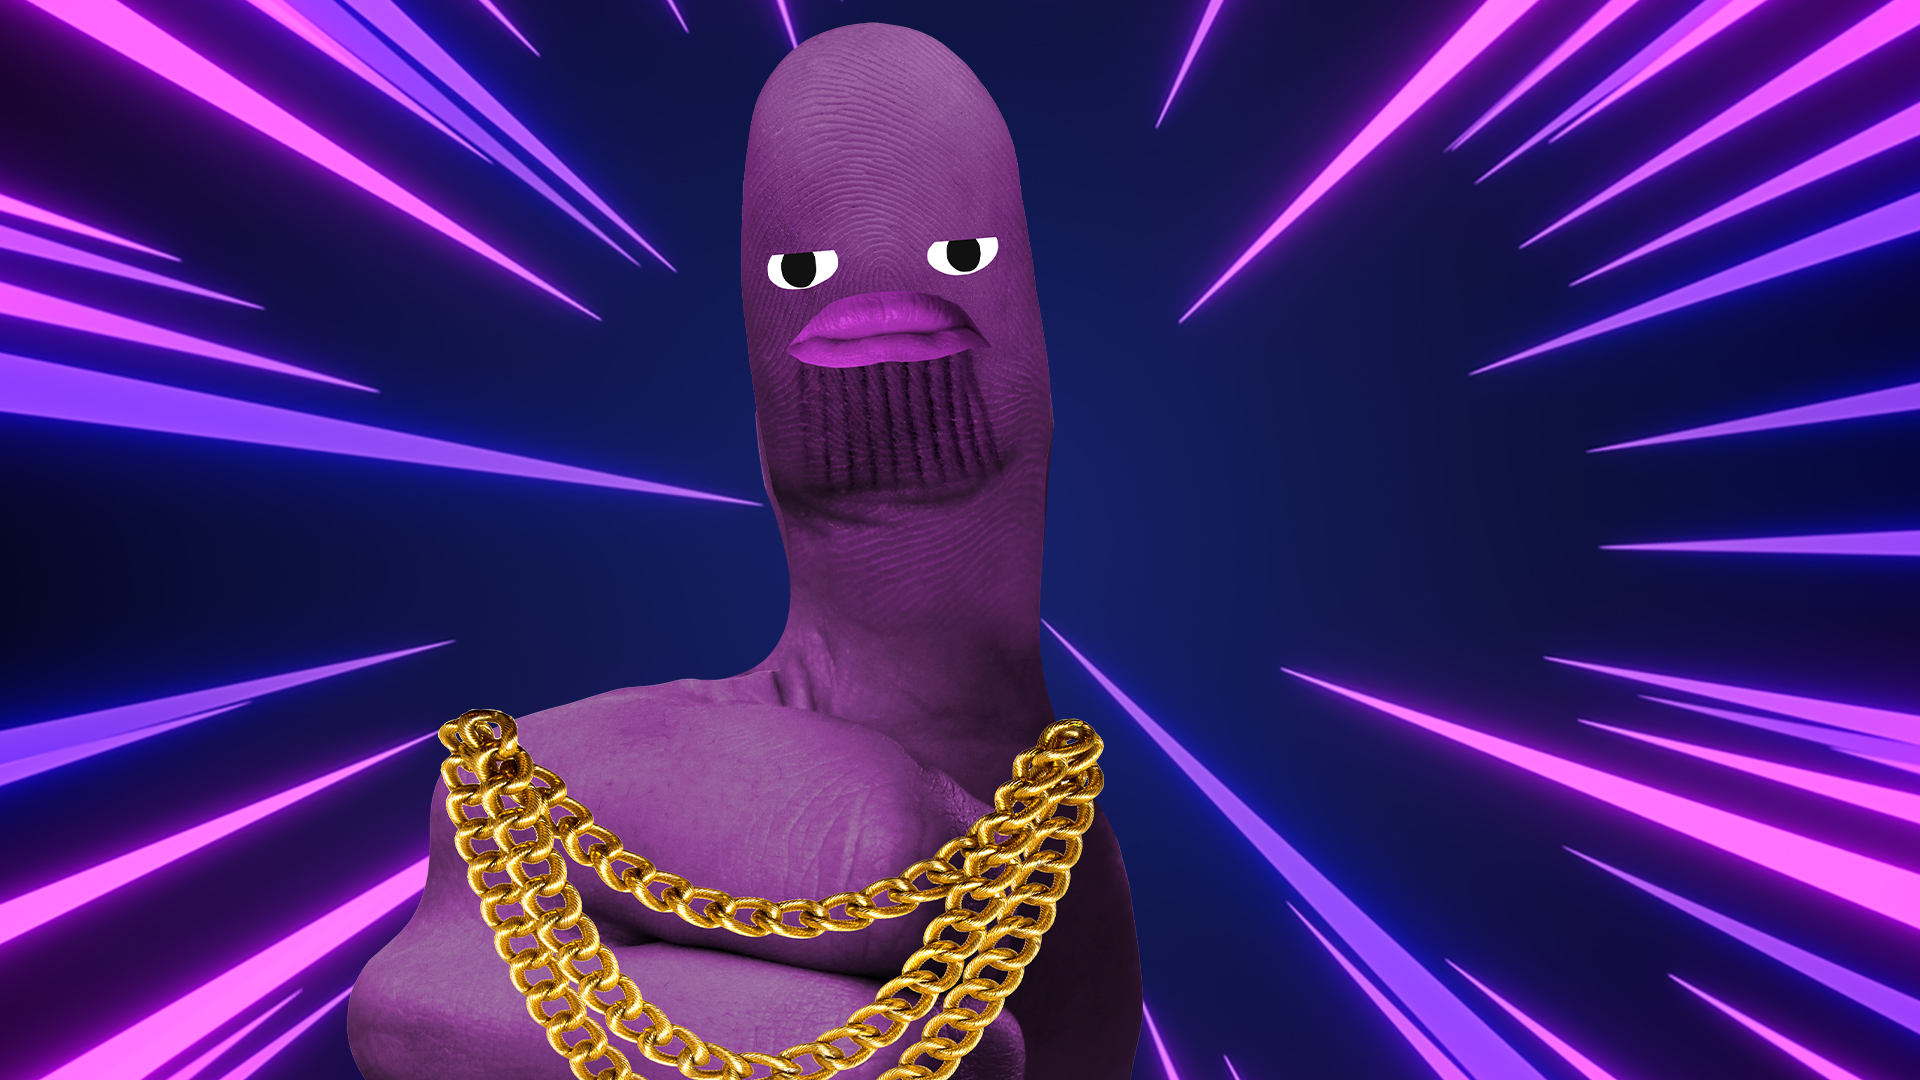 Thanos Thumb on purple laser background 